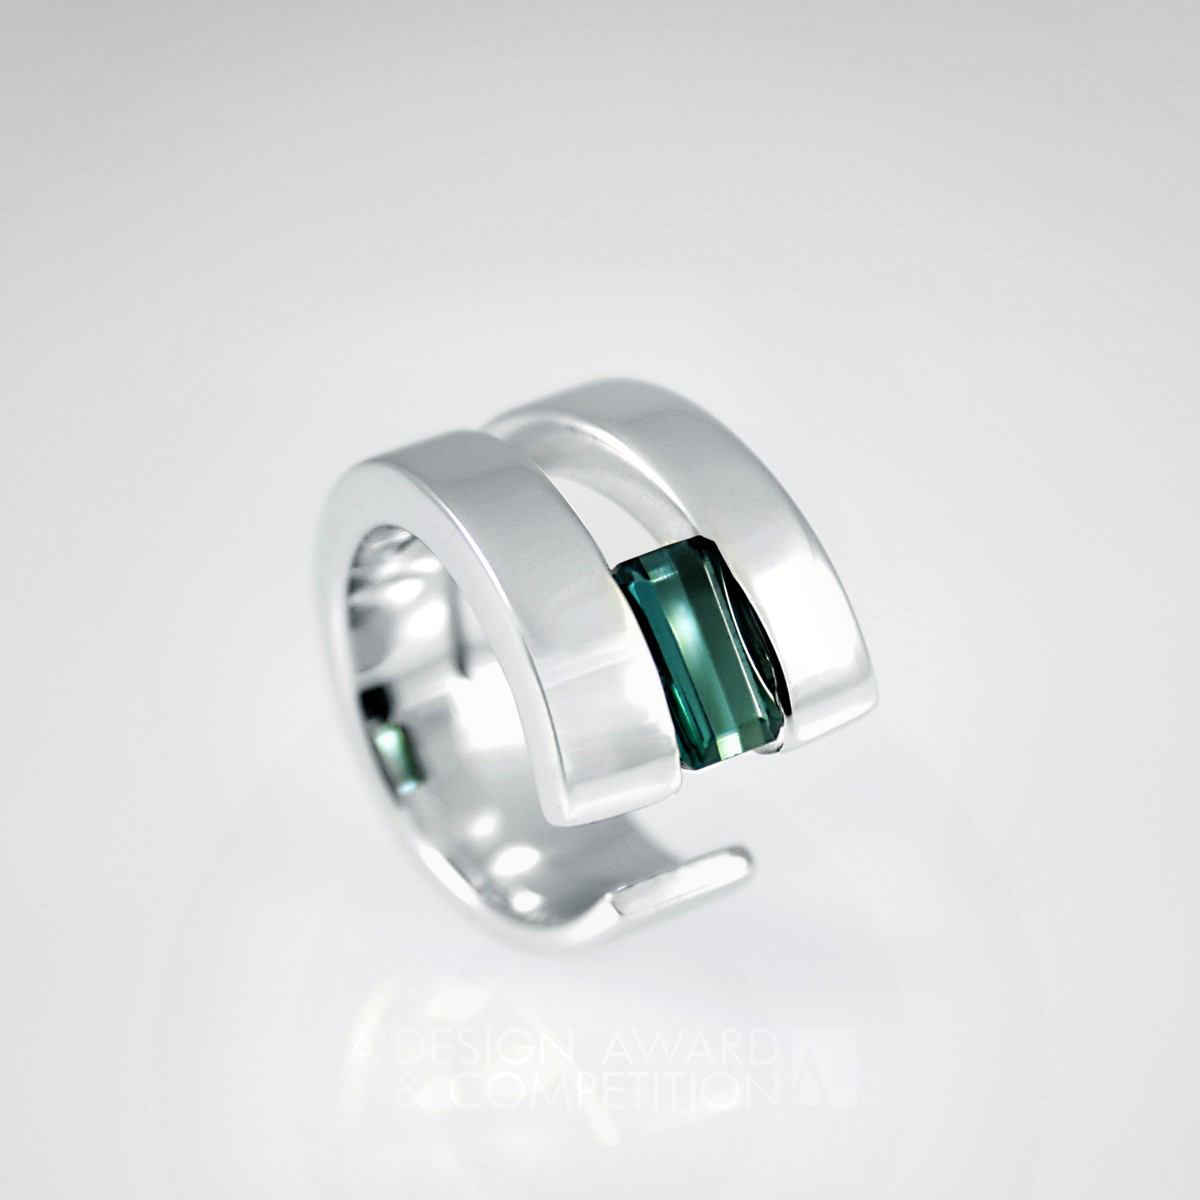 Sibilo Ring by Brazil & Murgel